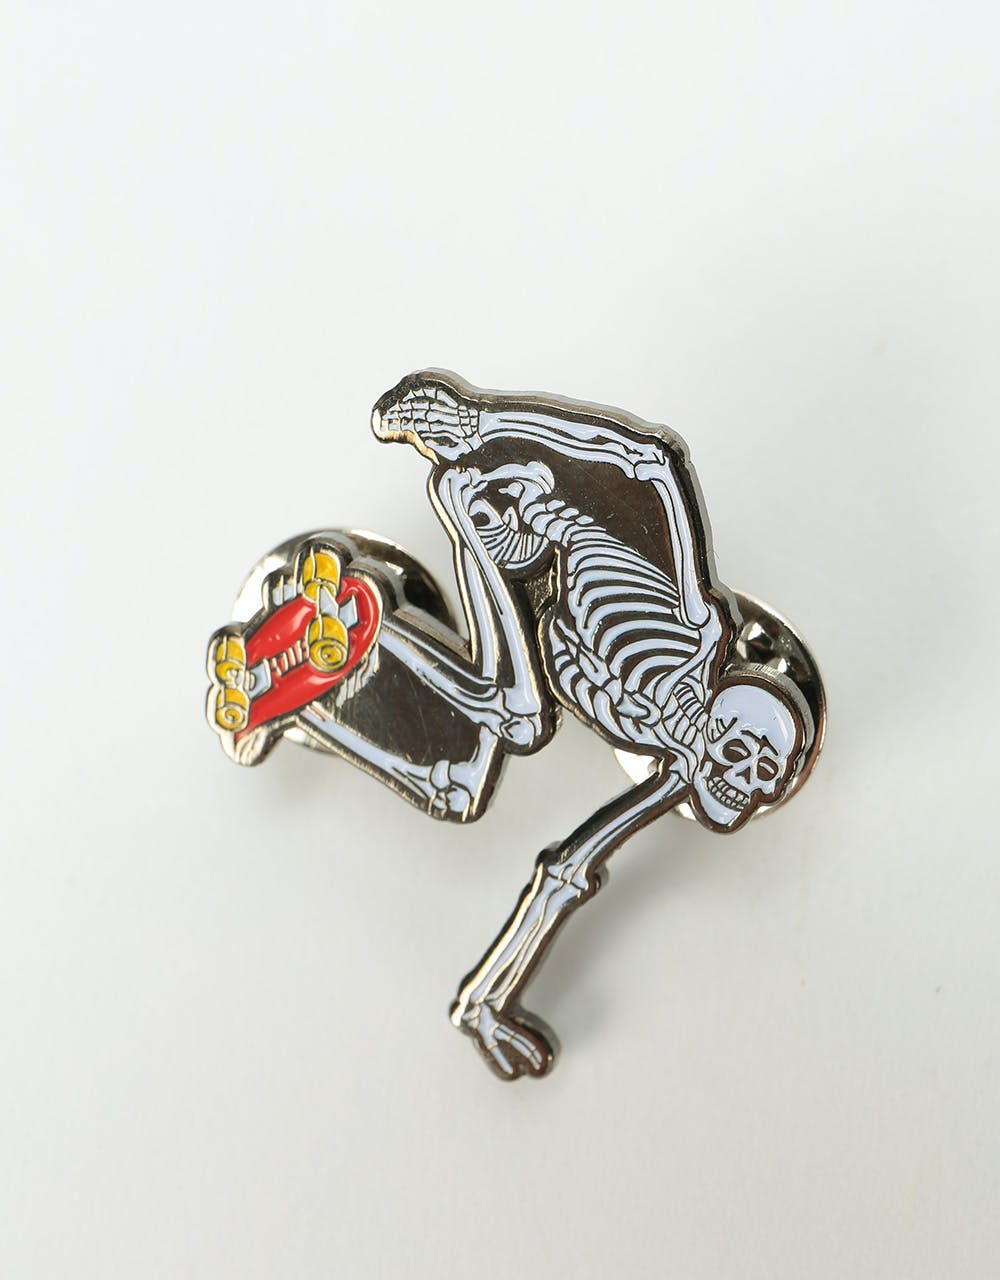 Powell Peralta Skateboard Skeleton Lapel Pin - Multi